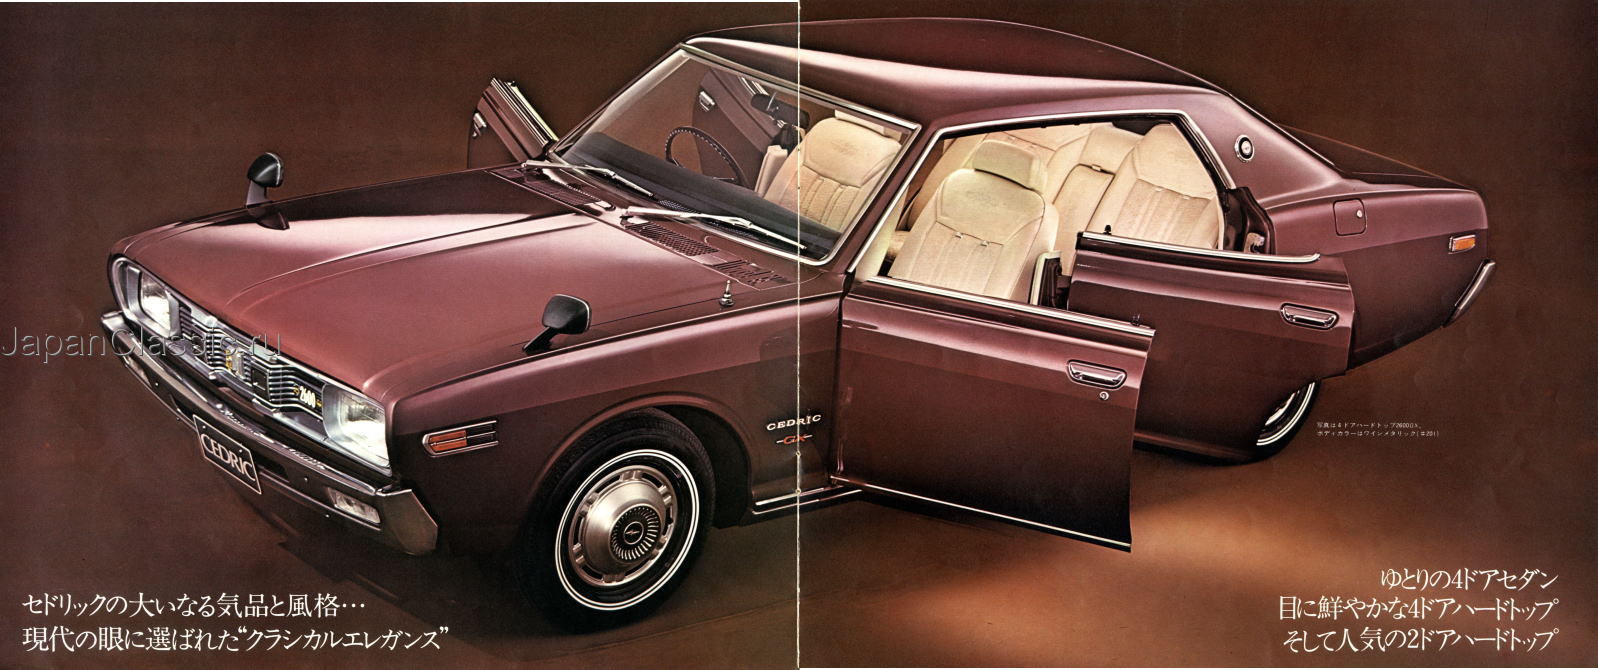 Nissan Cedric 1971 230 - JapanClassic